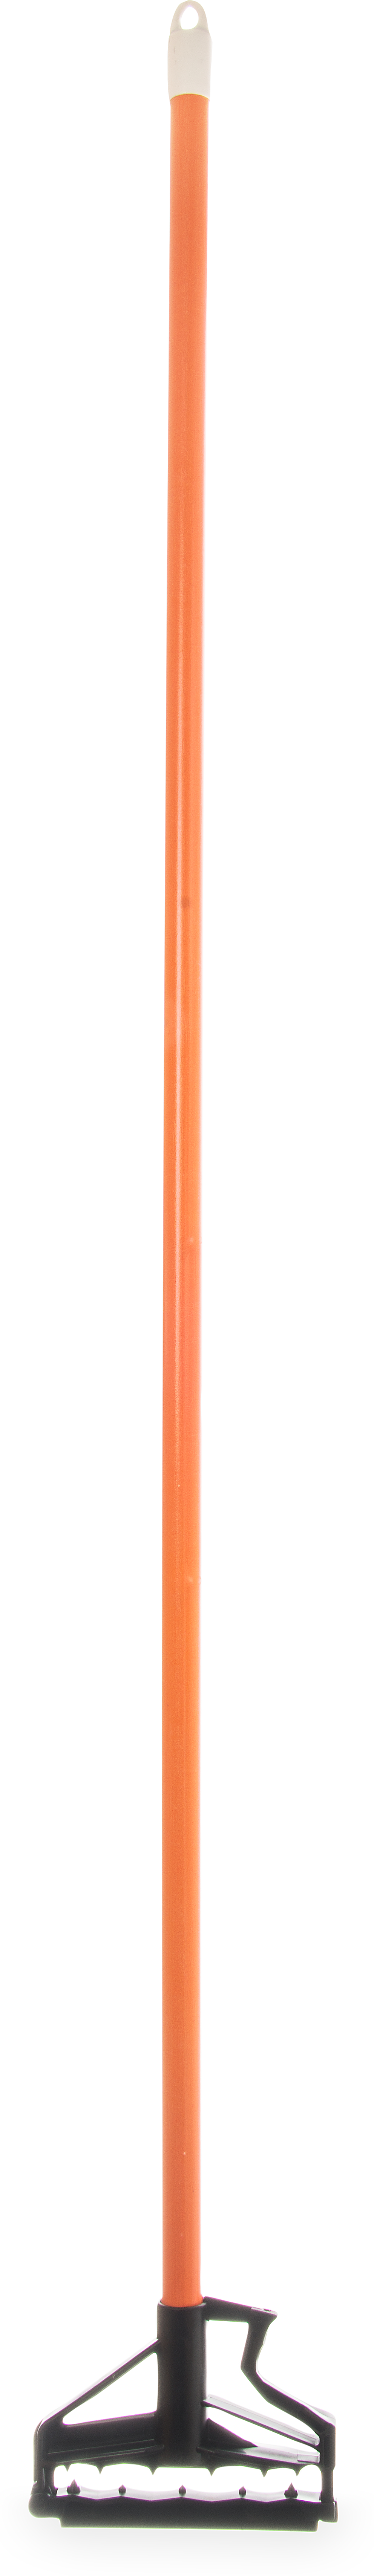 Sparta Spectrum Quik-Release Fiberglass Mop Handle 60 Long / 1 D - Orange